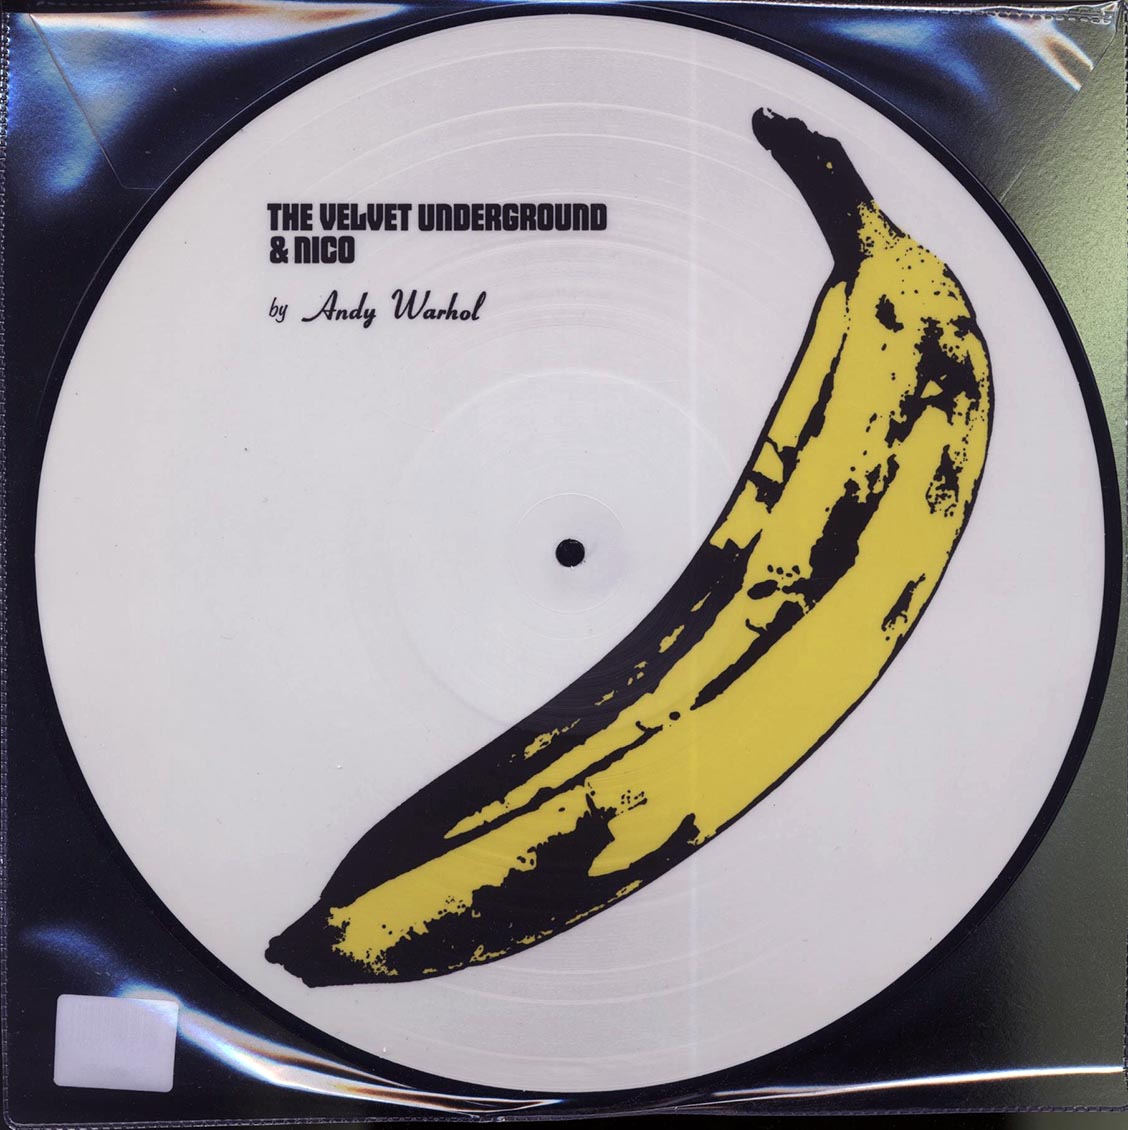 The Velvet Underground - The Velvet Underground & Nico [2008 Reissue Picture Disc] [New Vinyl Record LP]